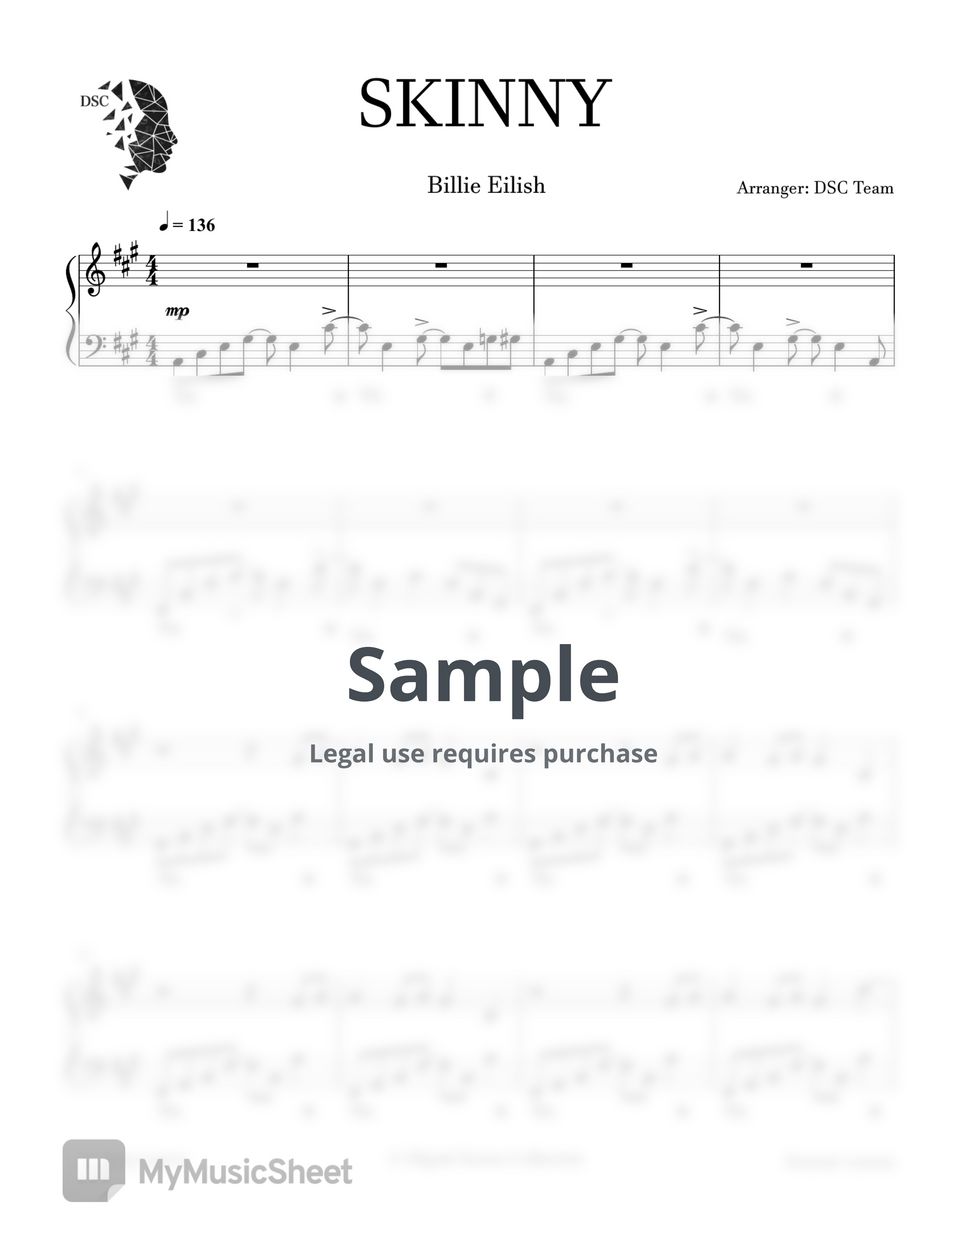 Billie Eilish - SKINNY by Digital Scores Collection